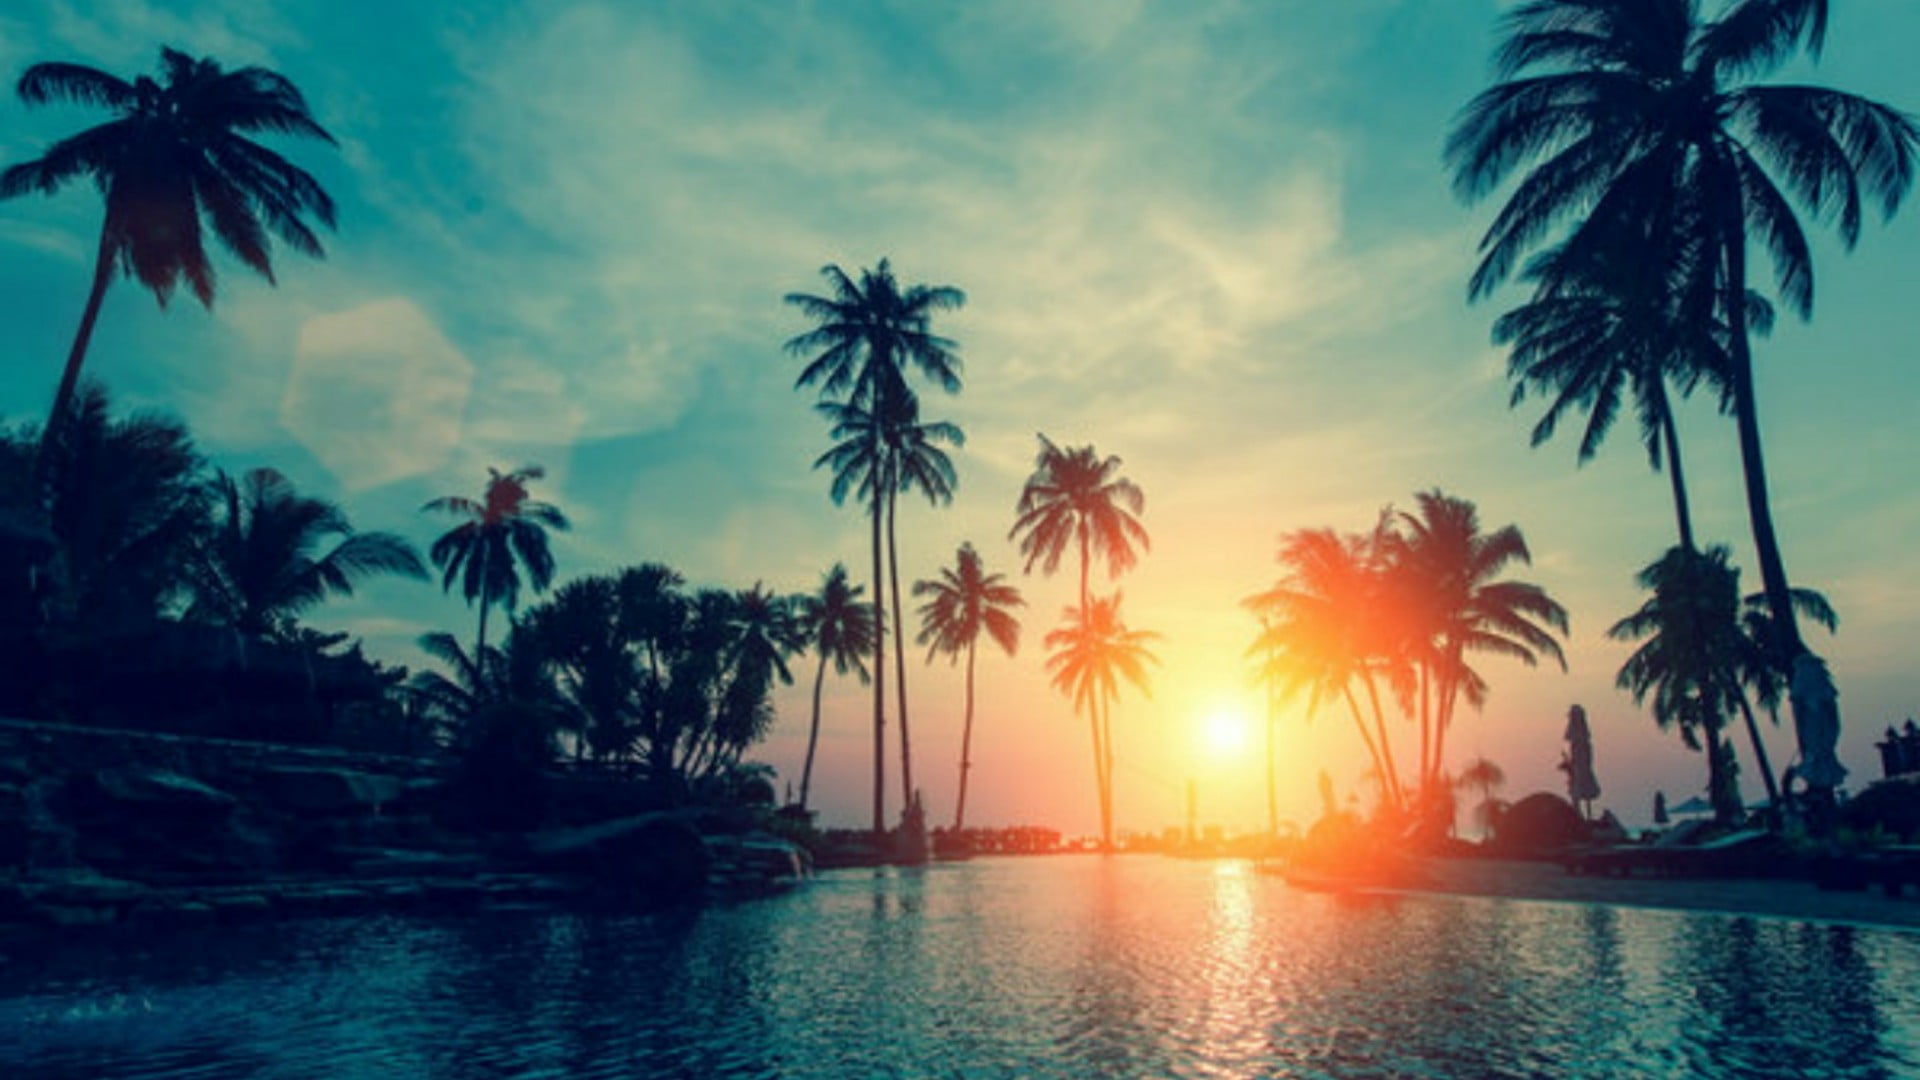 nature, sky, palm tree, sunset, sea, evening, sunlight, tropical climate